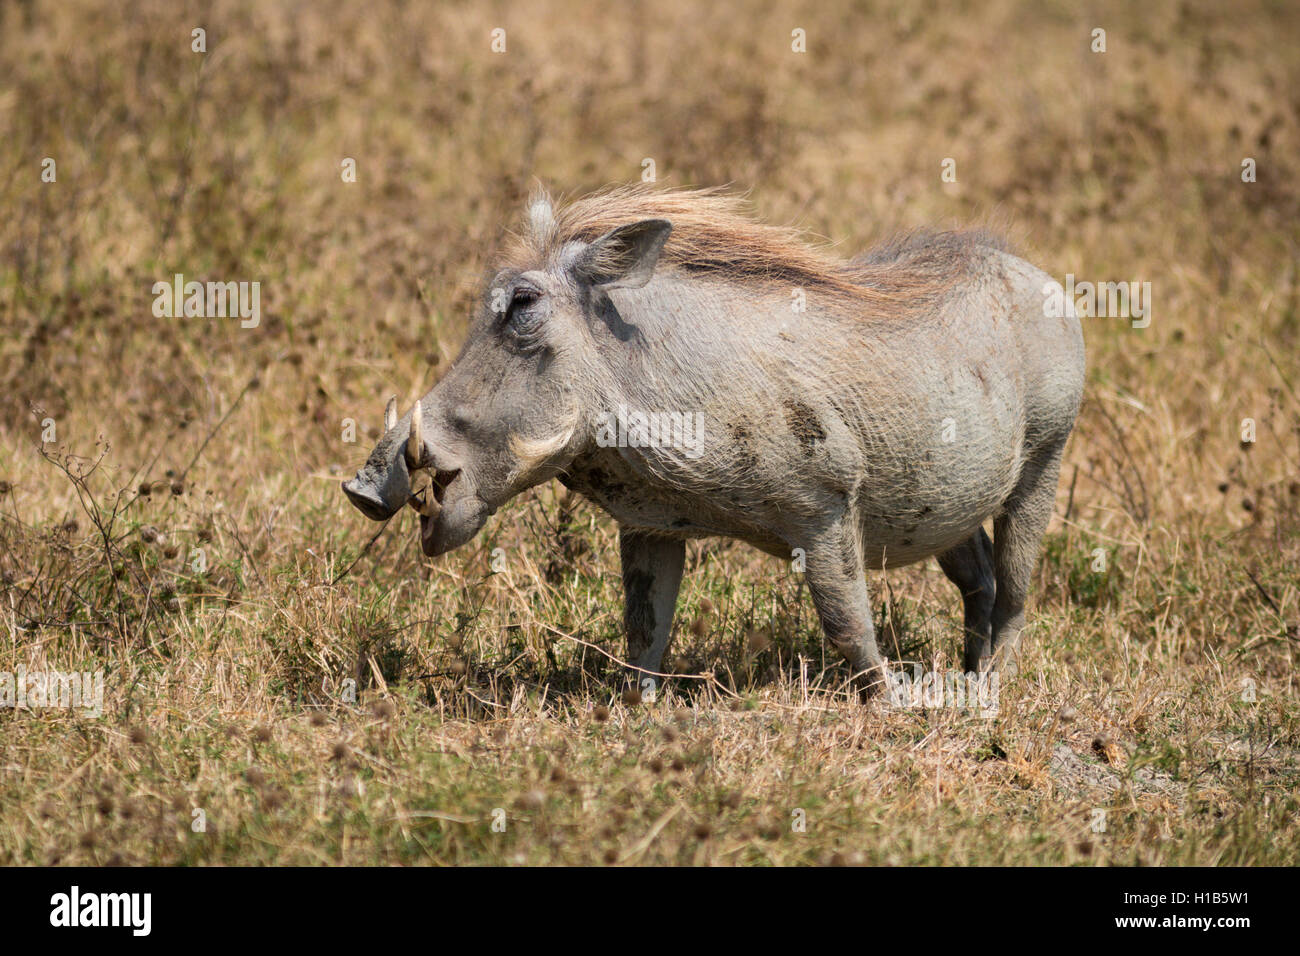 Common warthog (Phacochoerus africanus) Stock Photo